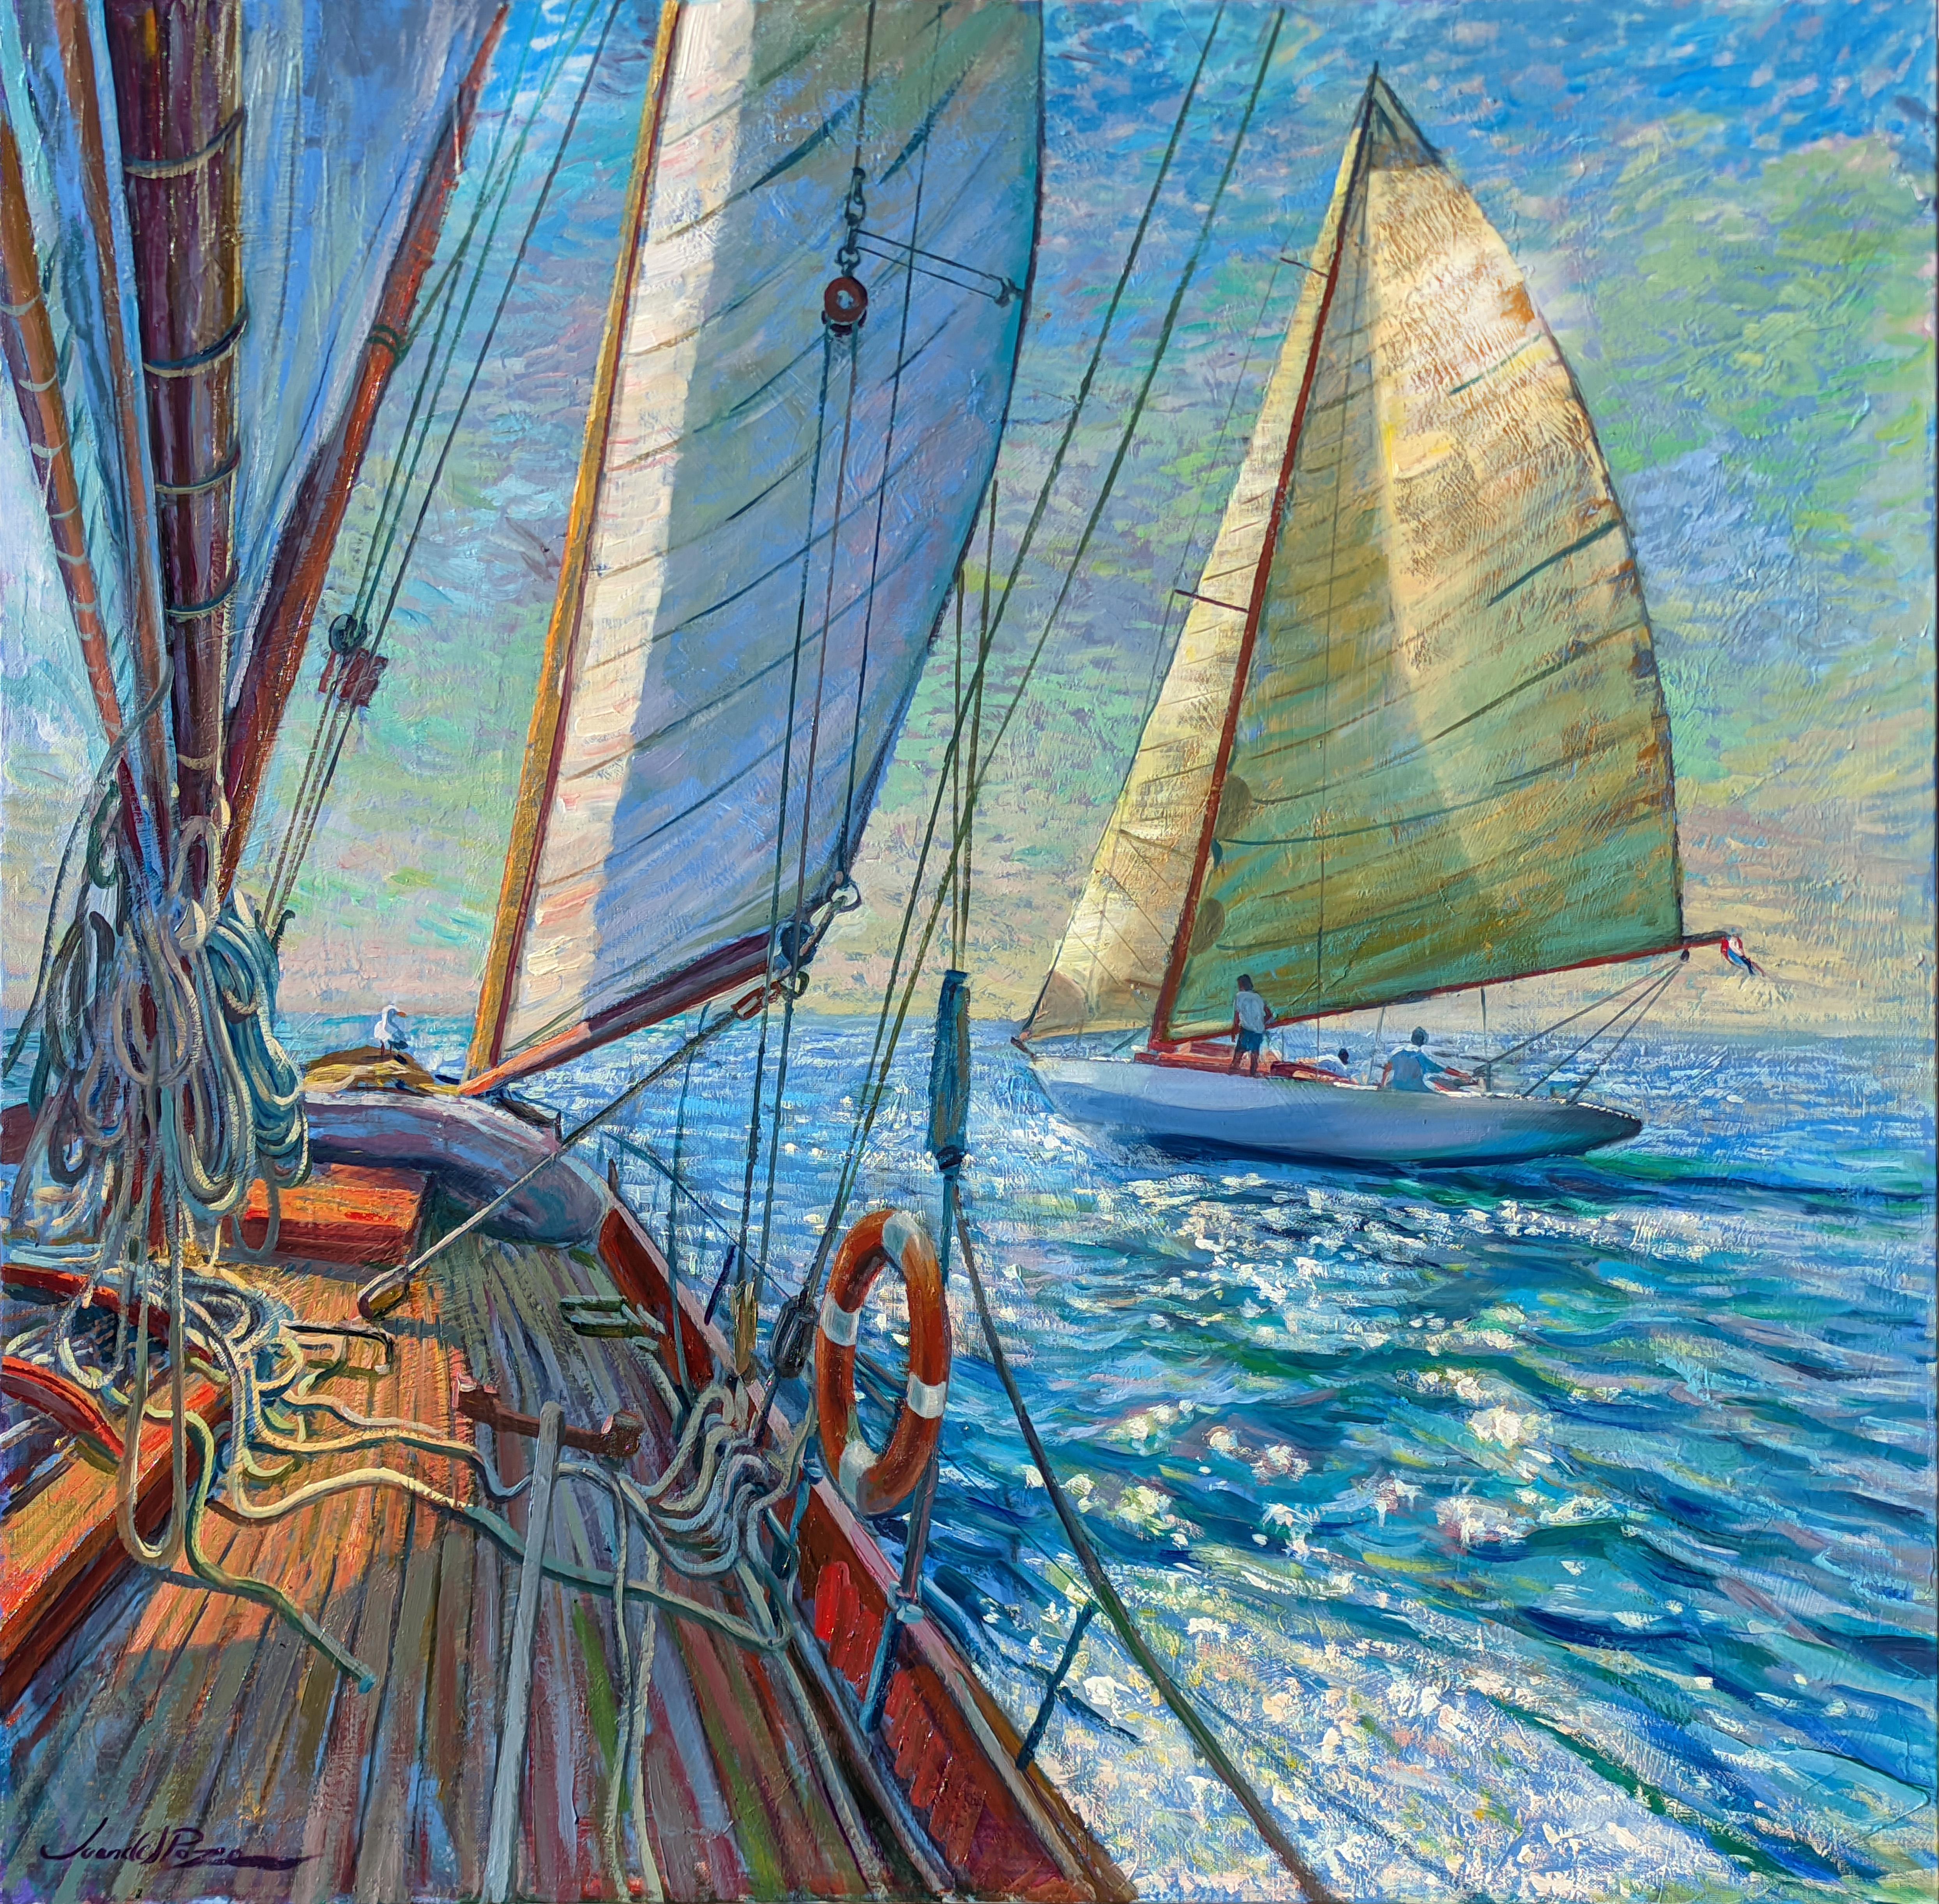 Juan del Pozo Figurative Painting - Shining Sea-original impressionism seascape sail oil painting- contemporary art